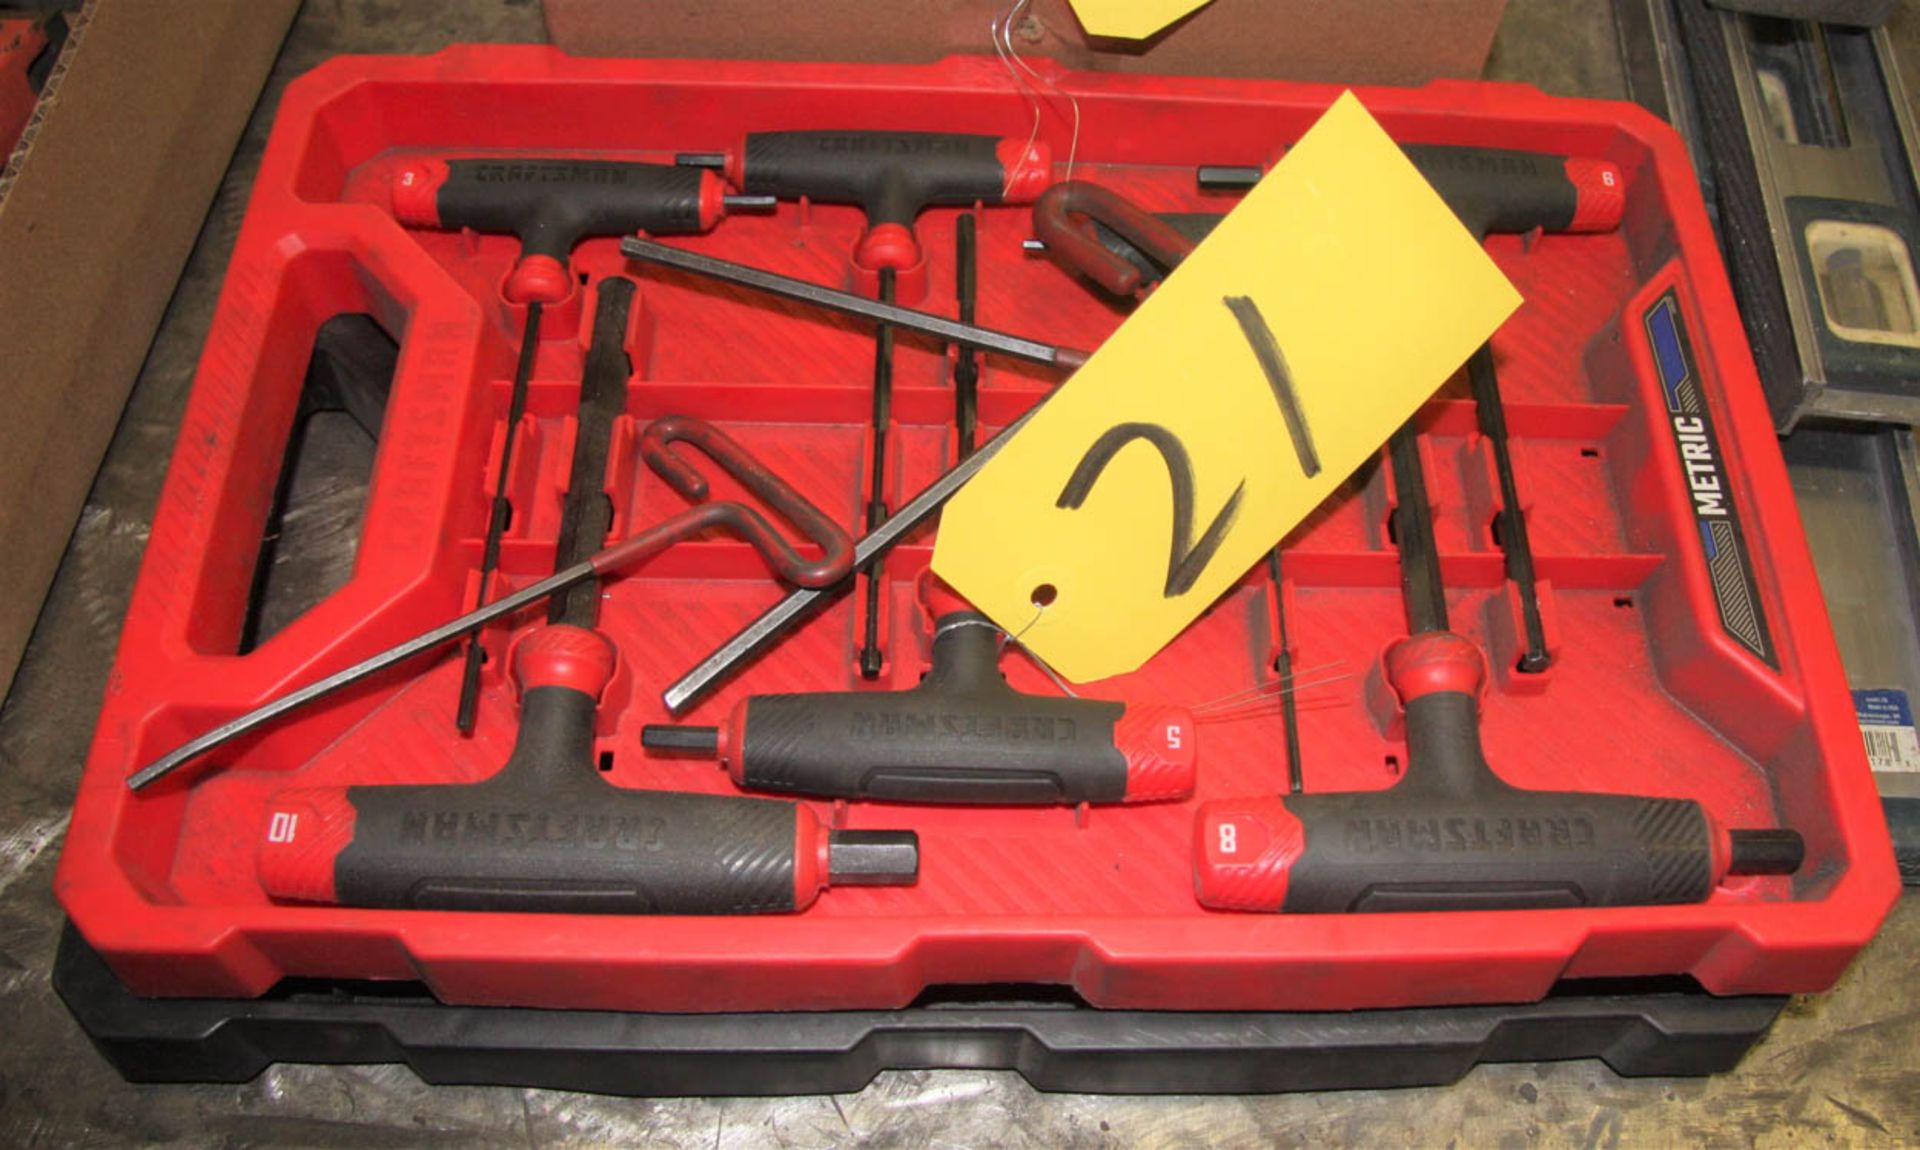 (2) Allen Wrench Kits